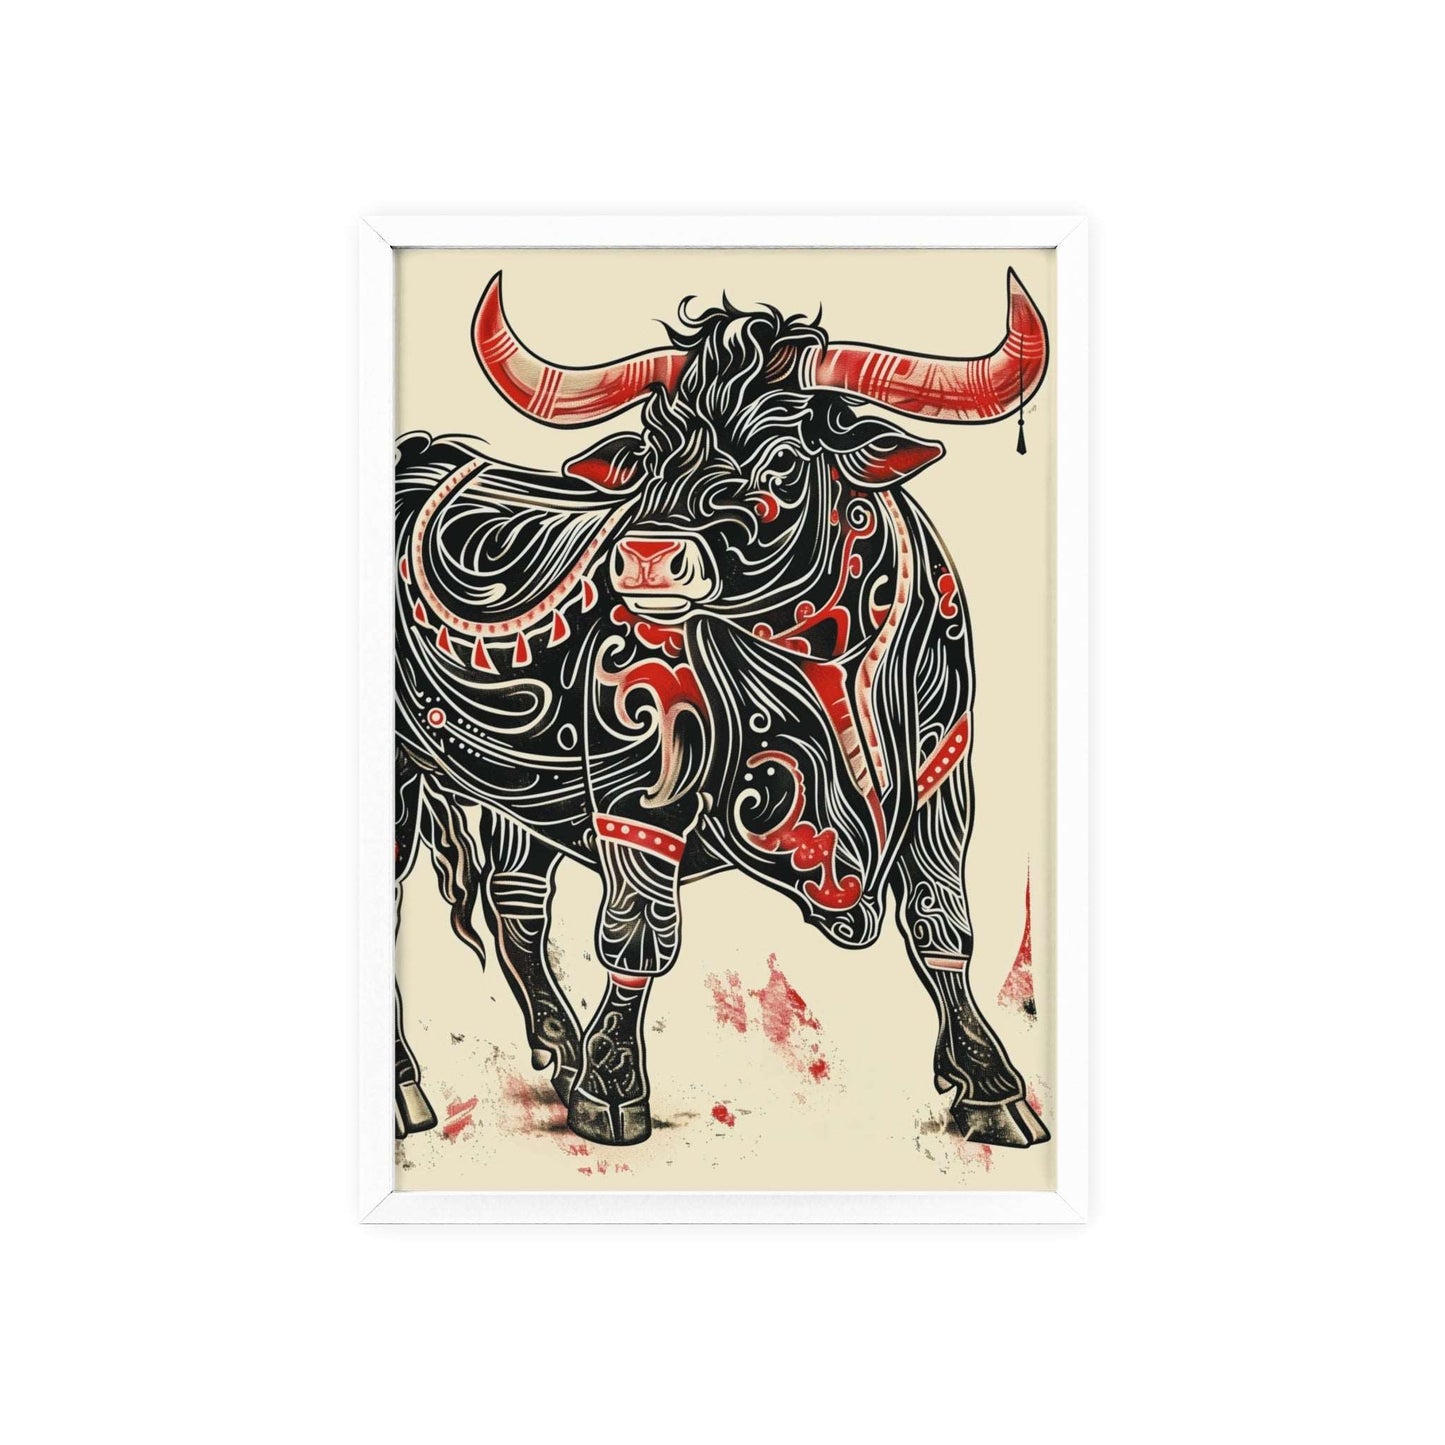 bull poster, animal art, bold design, black and red, wildlife decor, intricate patterns, nature illustration, wall art, dynamic artwork